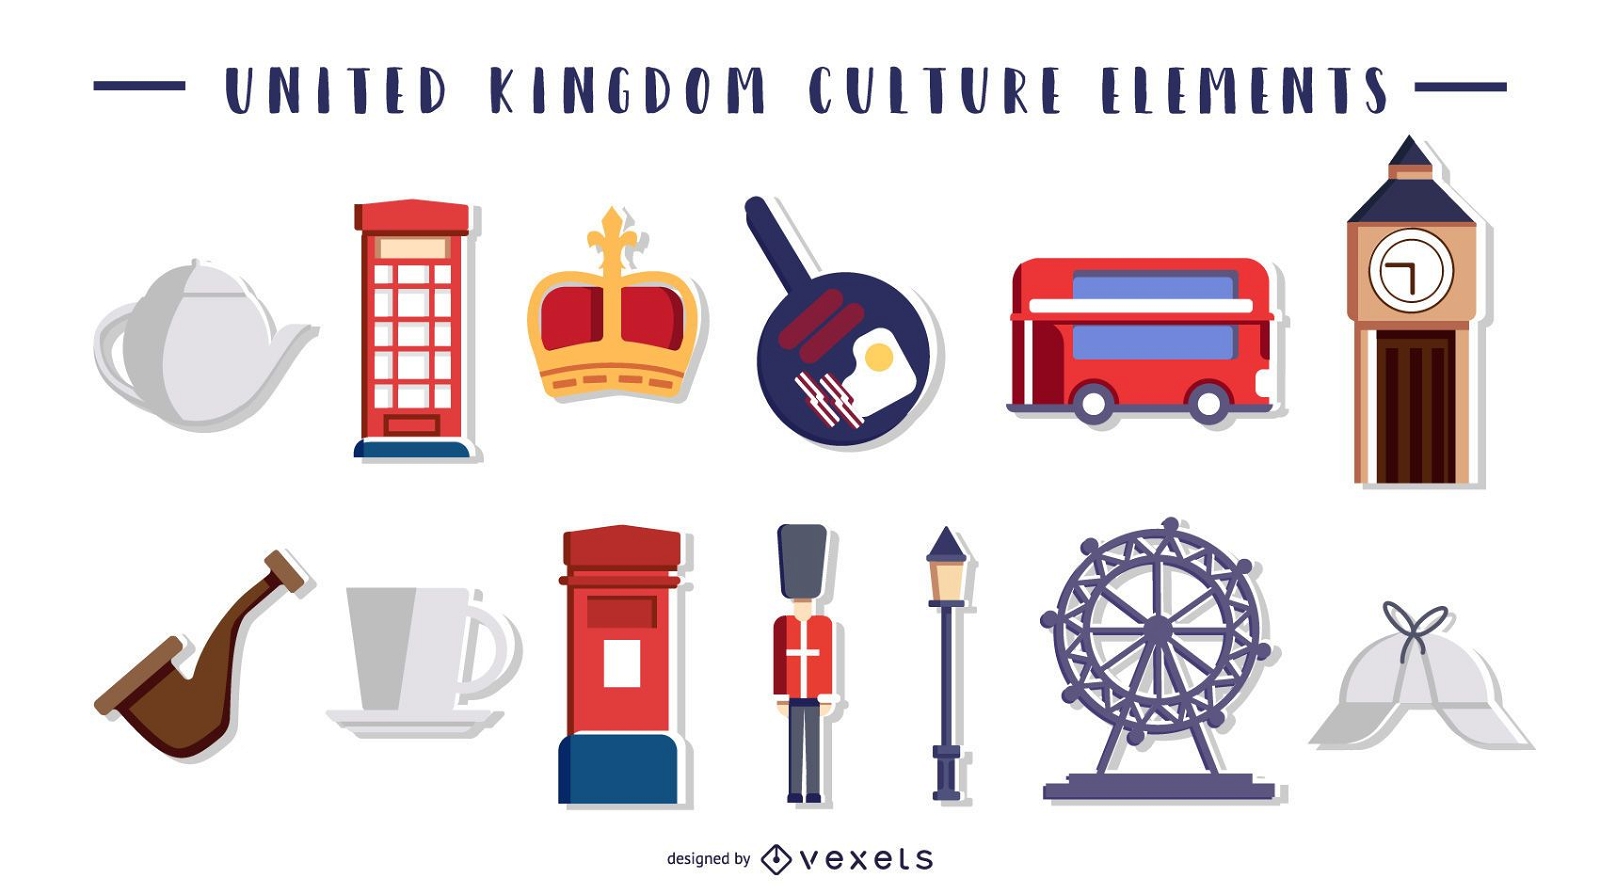 United Kingdom Culture Elements